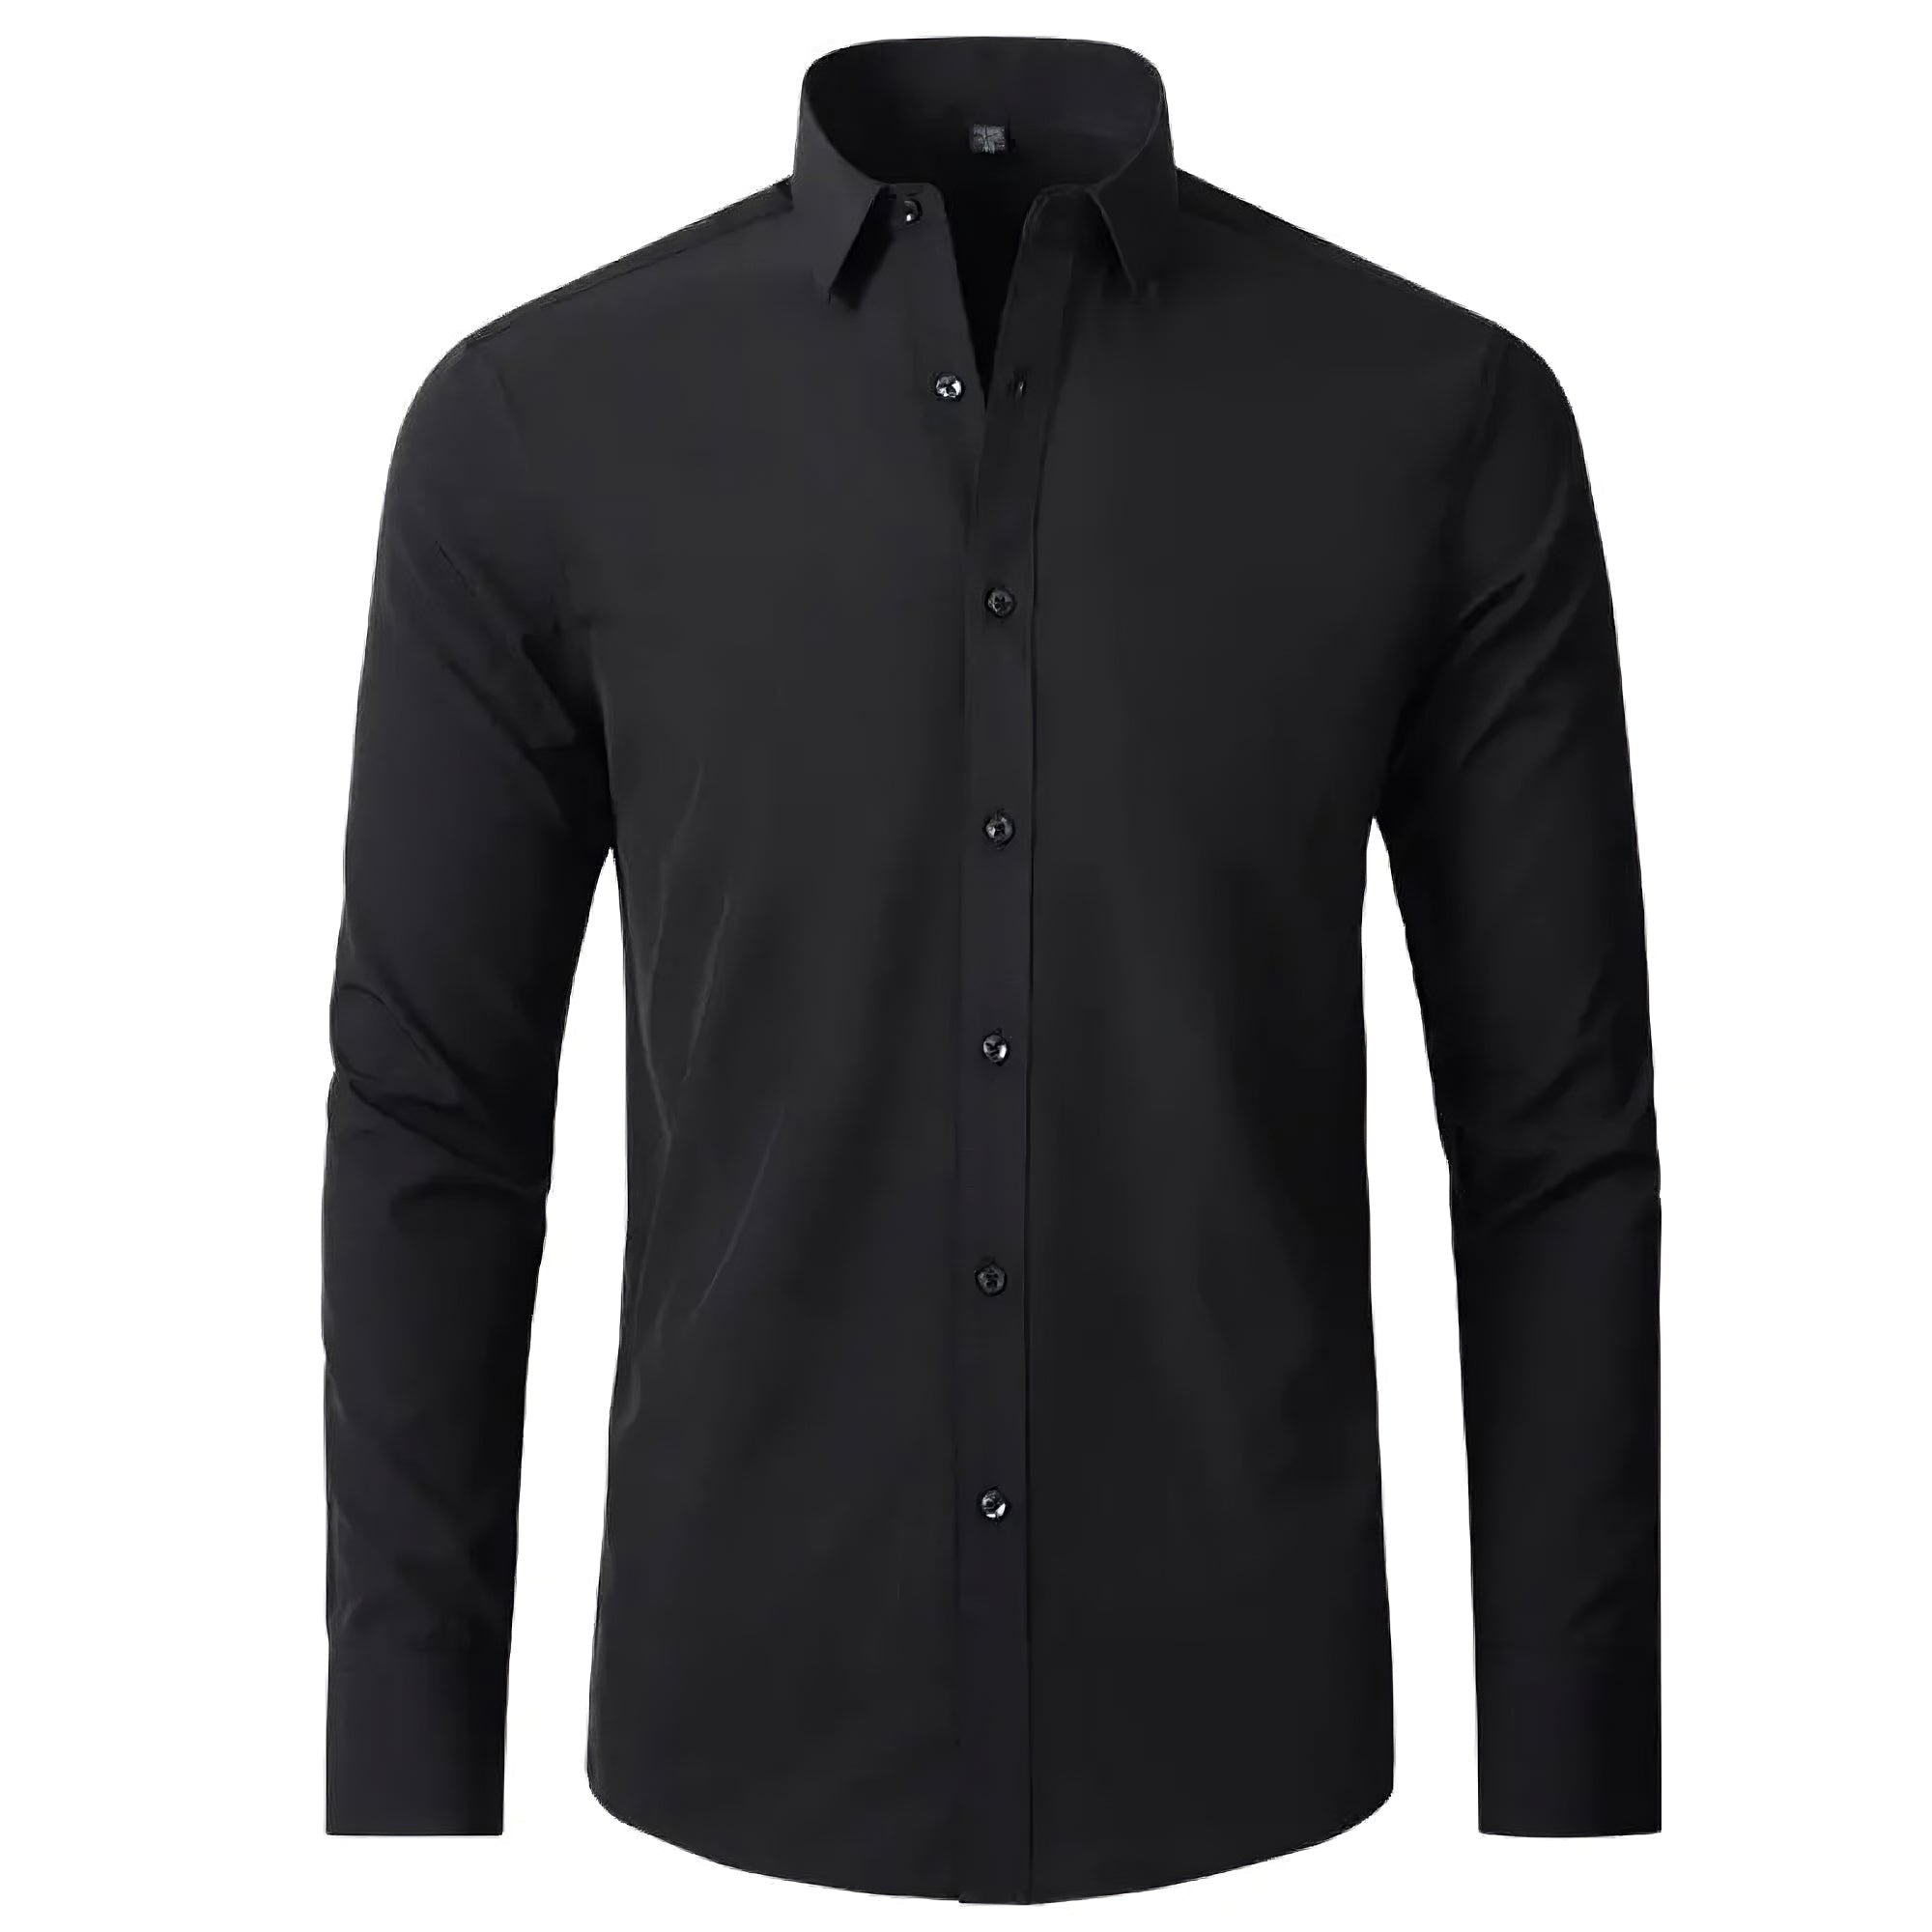 rob-heren-kreukelvrije-stretch-overhemd-zwart-s-38-605-PV2g-r_Wn-transformed.jpg